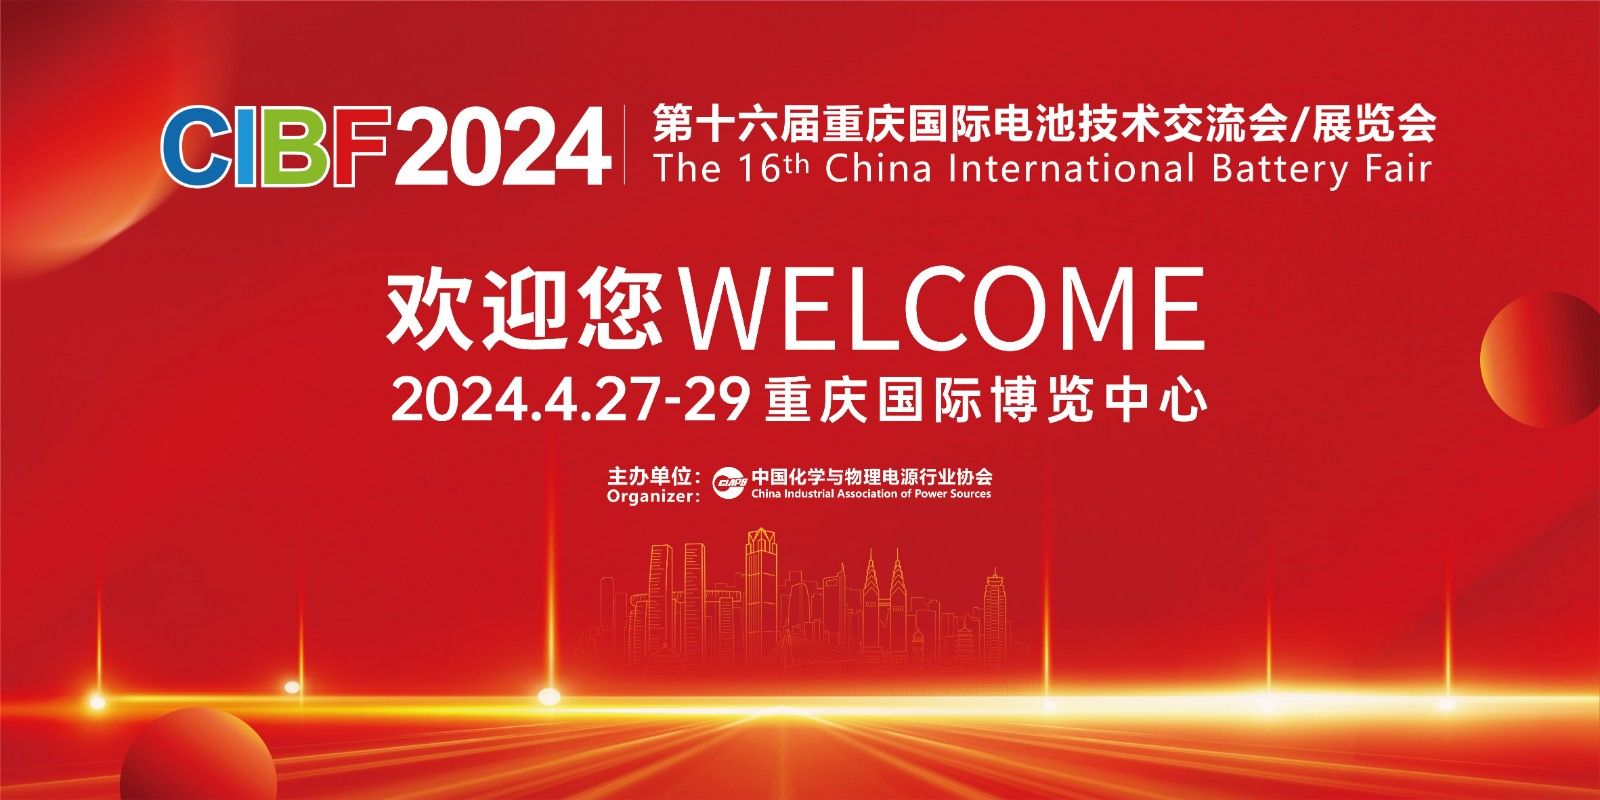 QQE จะเข้าร่วมงาน China International Battery Fair (CIBF) ครั้งที่ 16 ที่ศูนย์แสดงสินค้านานาชาติชงกิง